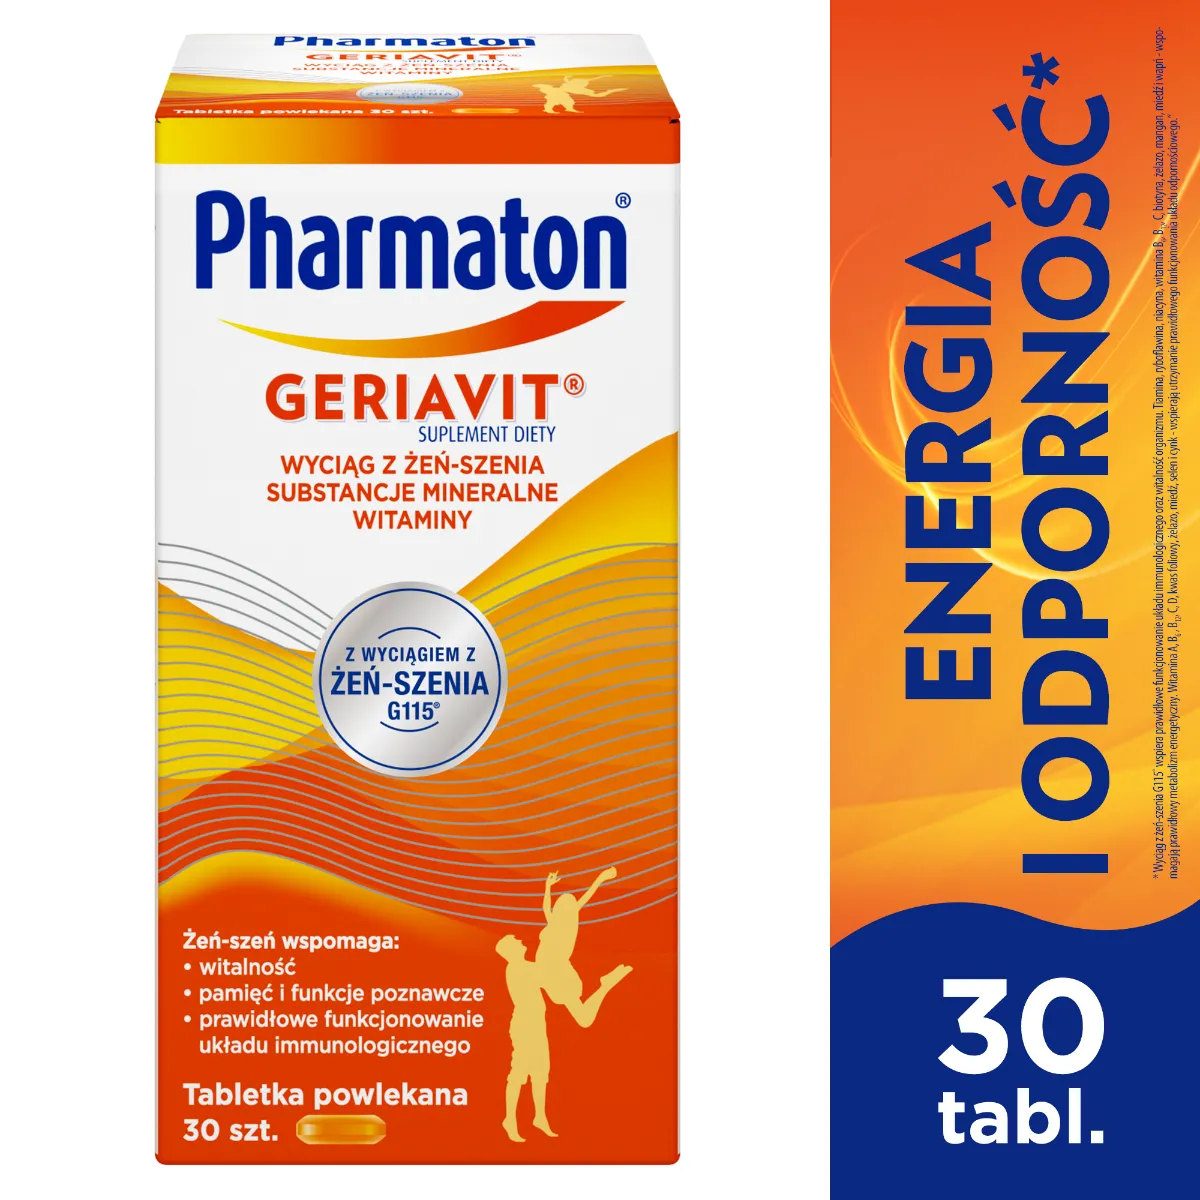 Pharmaton Geriavit, suplement diety, 30 tabletek powlekanych 